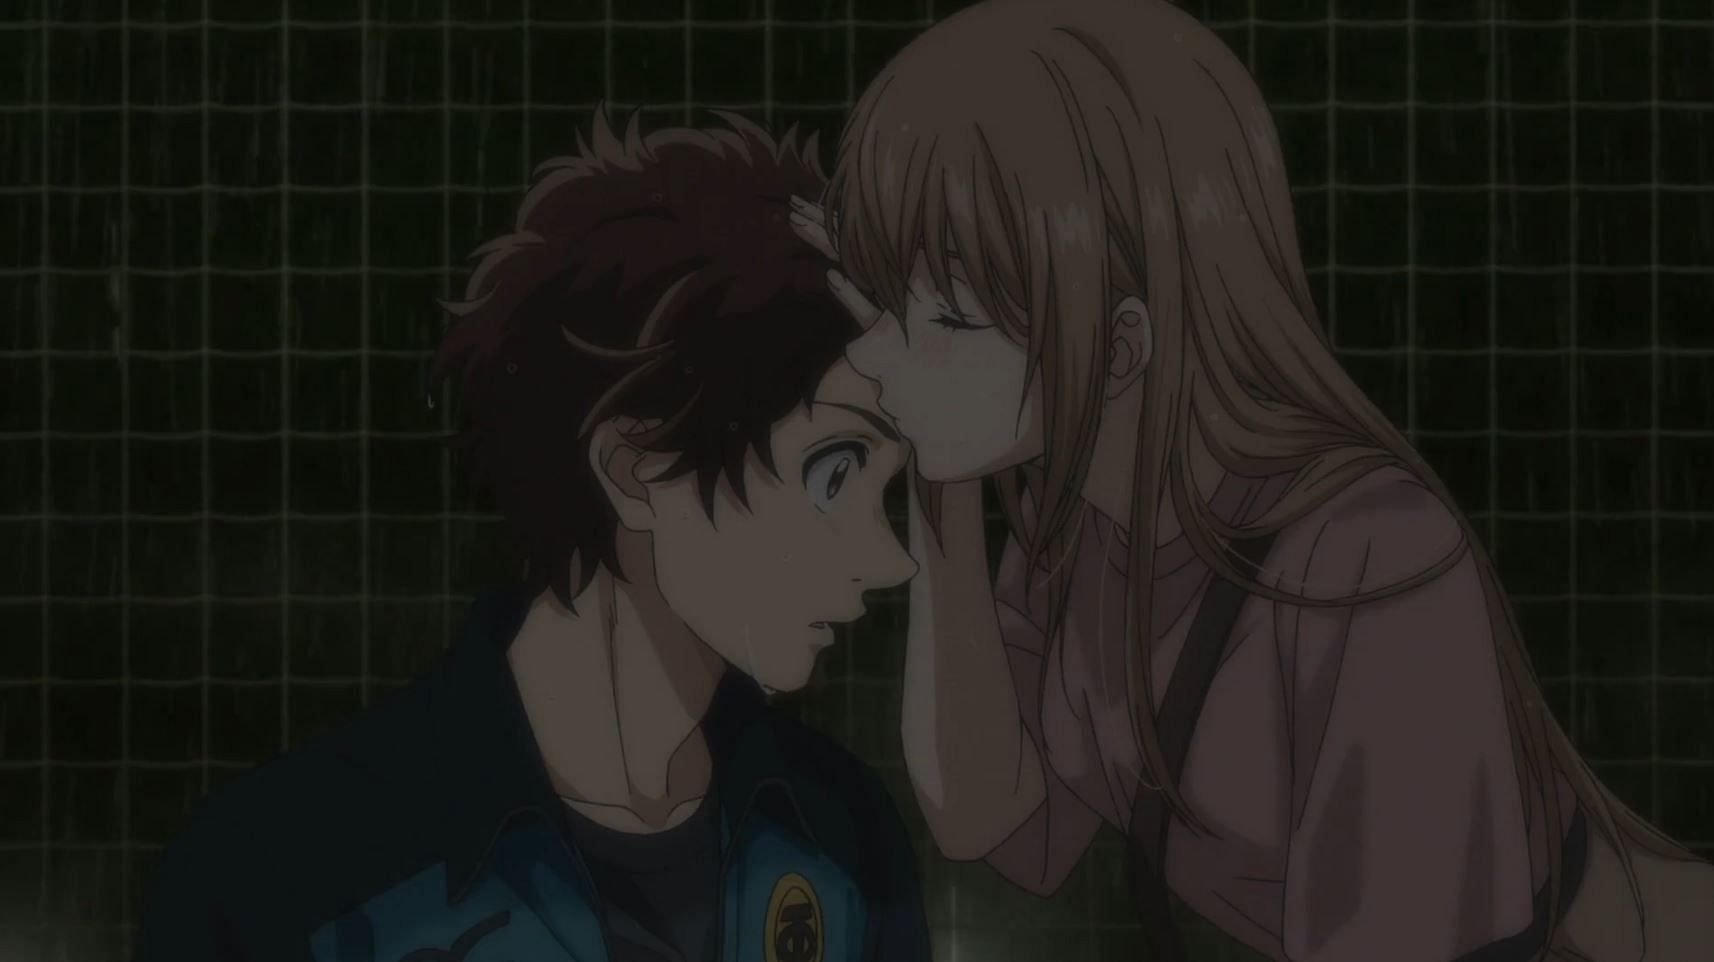 Hana kisses Aoi on the forehead (Image via Production I.G)